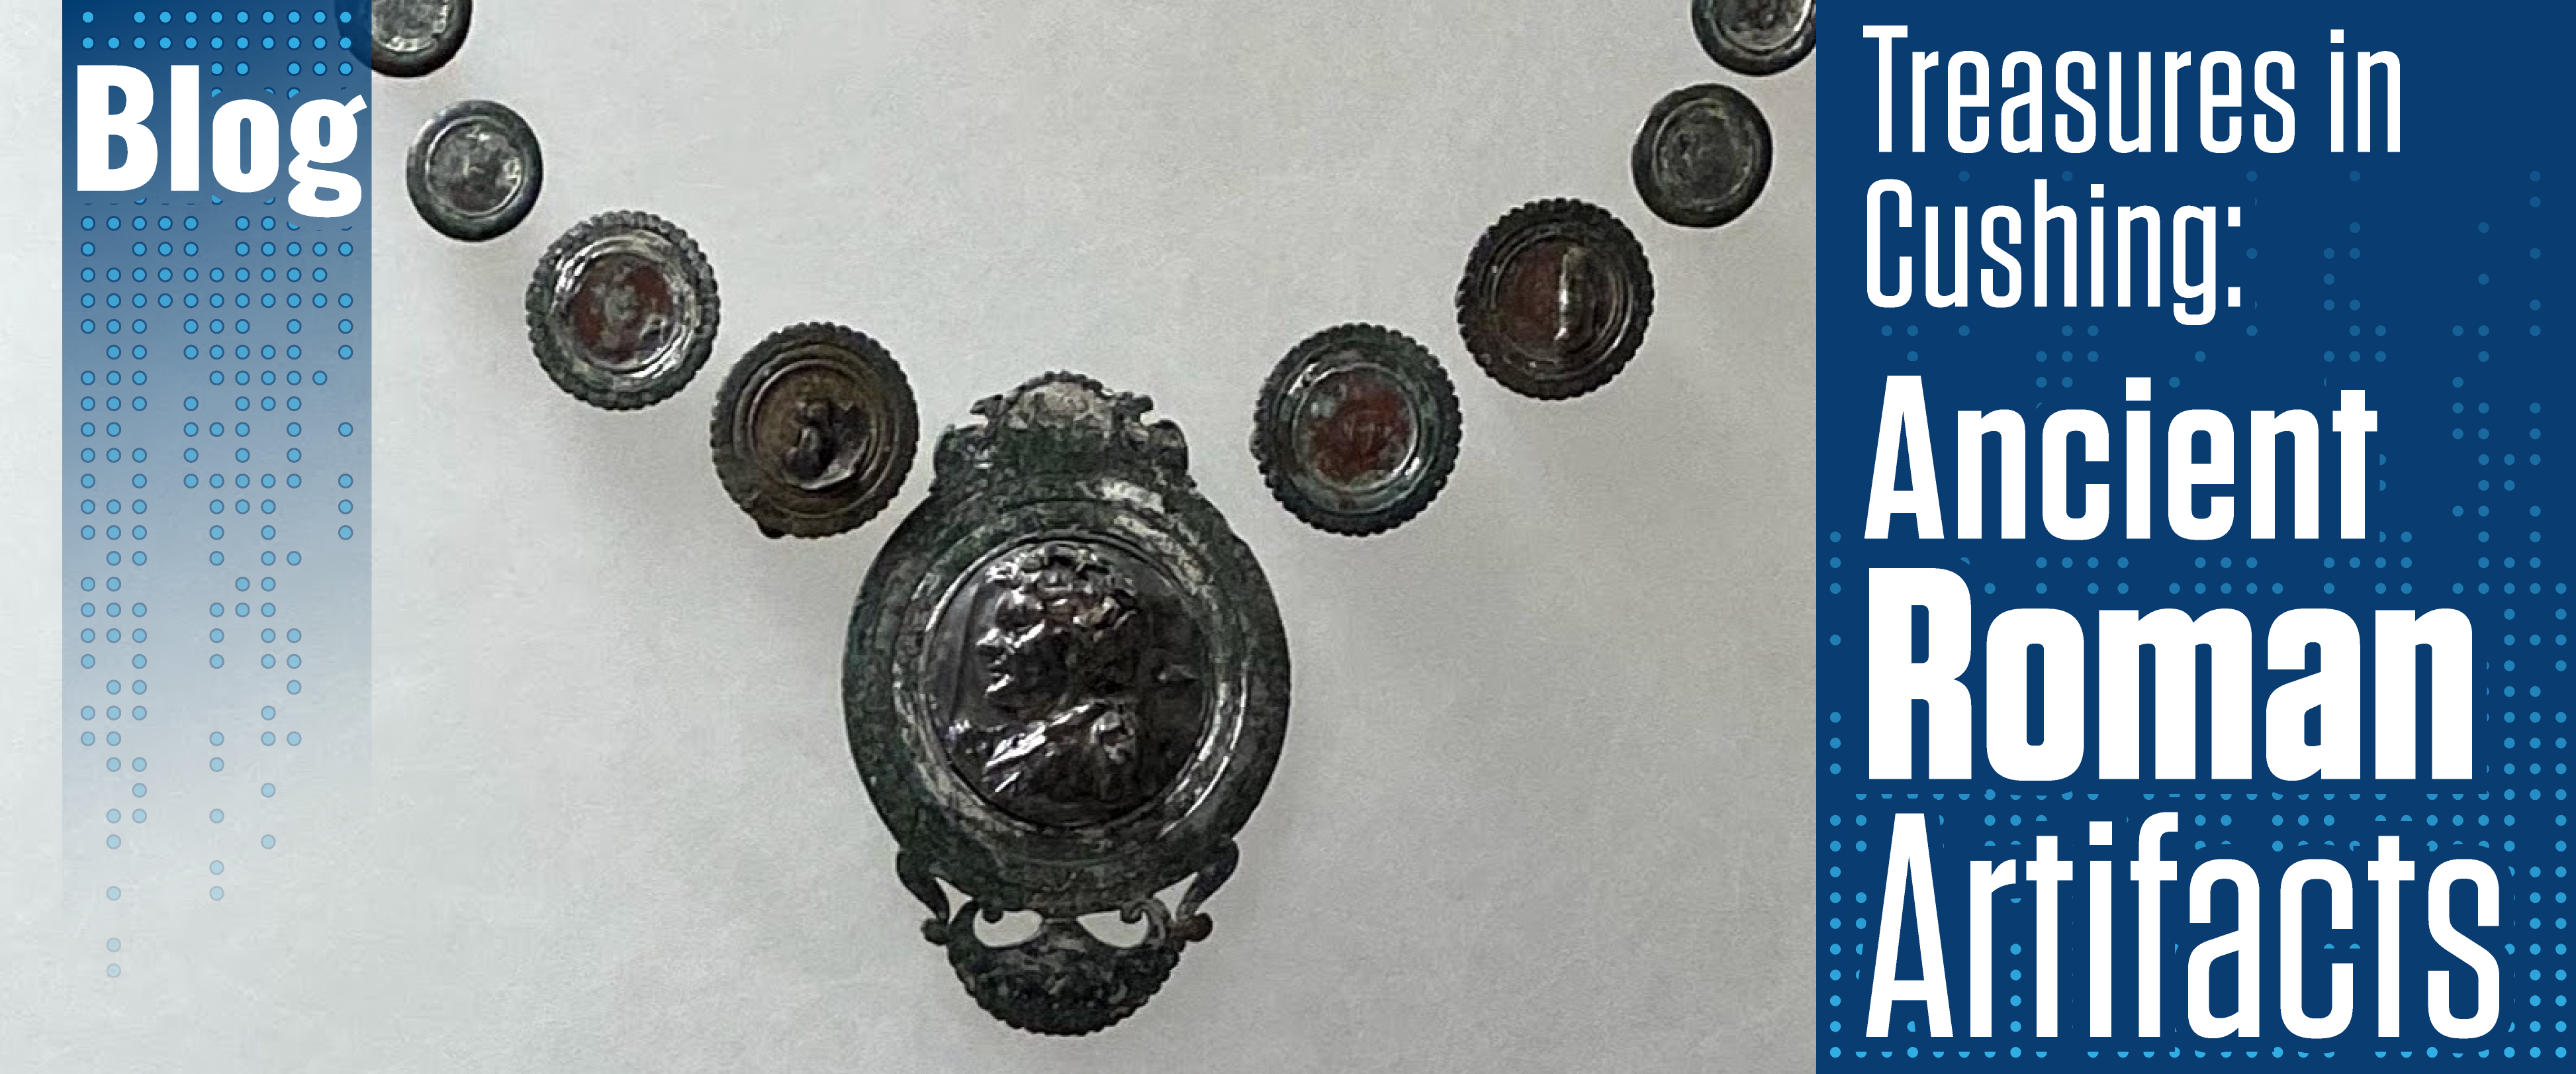 Blog Entry - Treasures in Cushing: Ancient Roman Artifacts